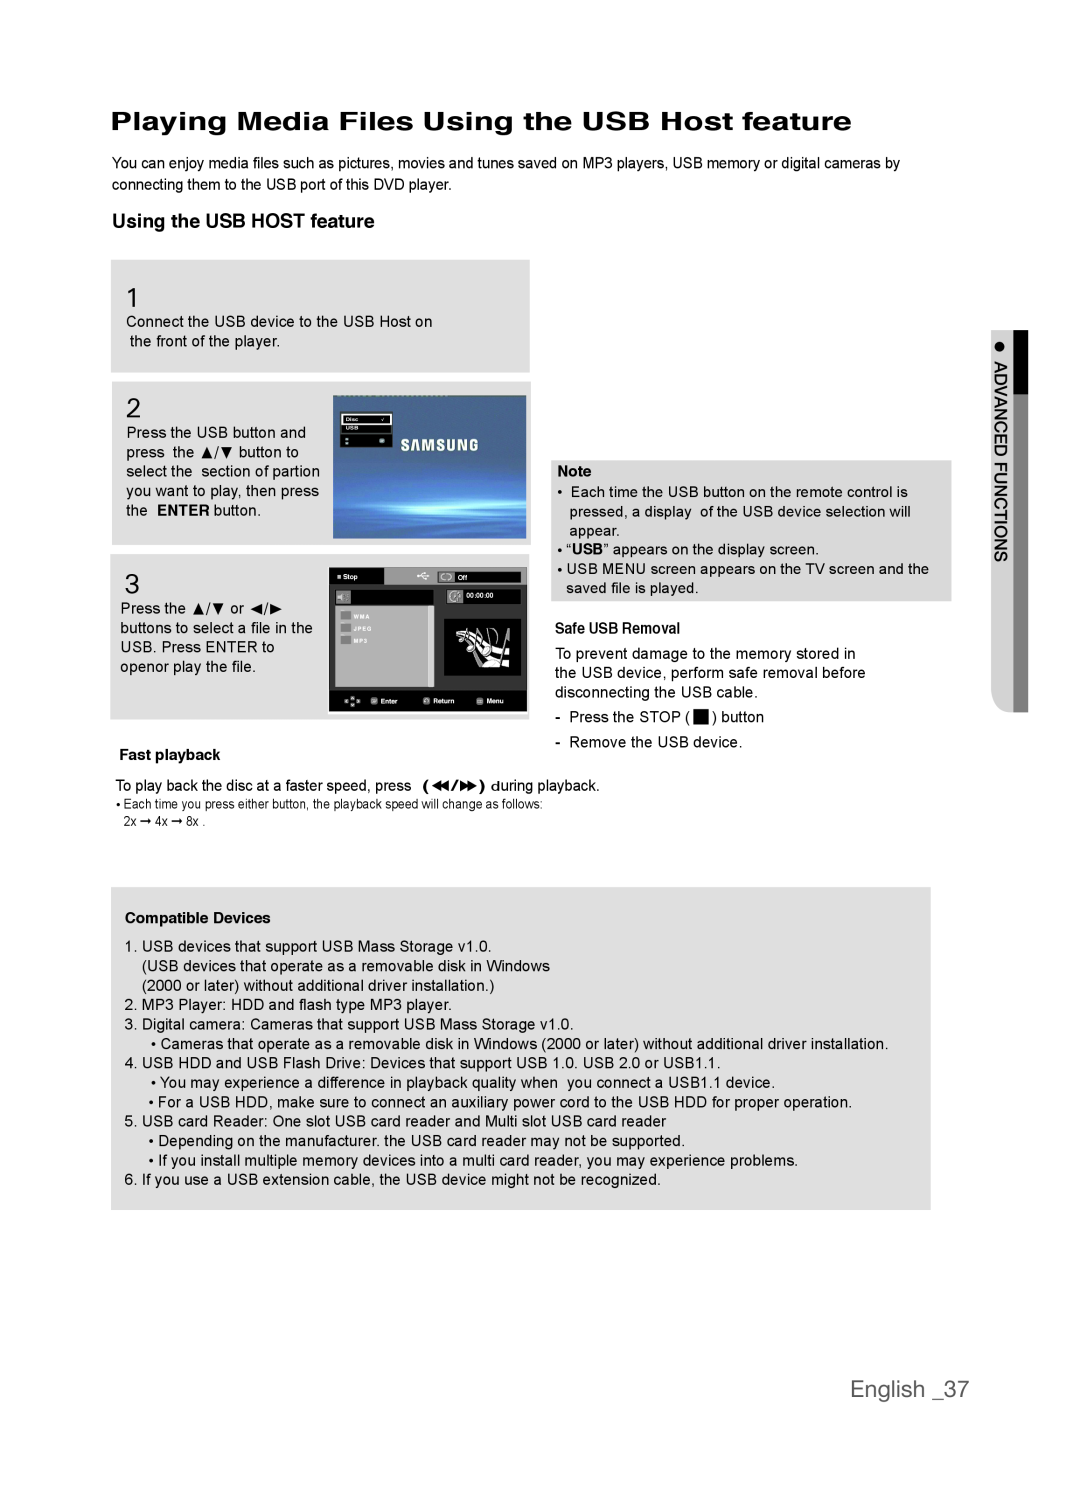 Samsung AK68-01770G Playing Media Files Using the USB Host feature, Using the USB HOST feature, English, Safe USB Removal 